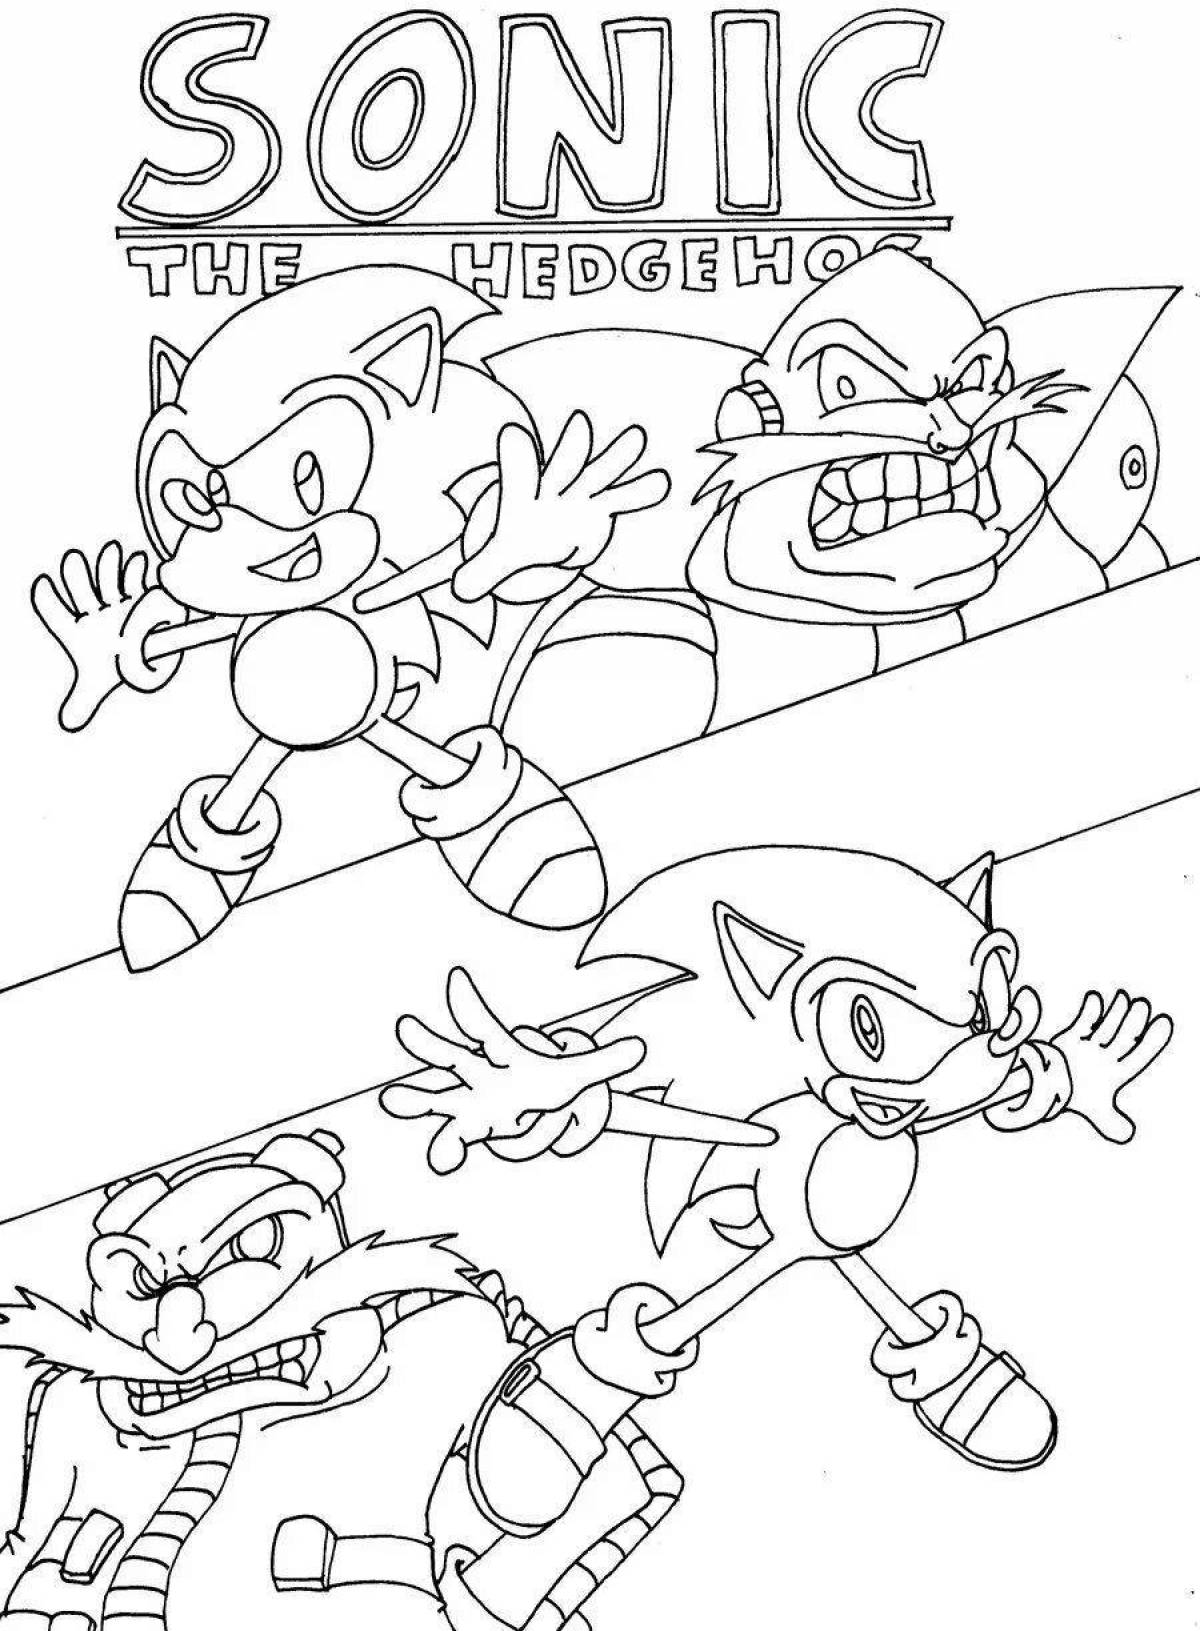 Sonic mania bright coloring